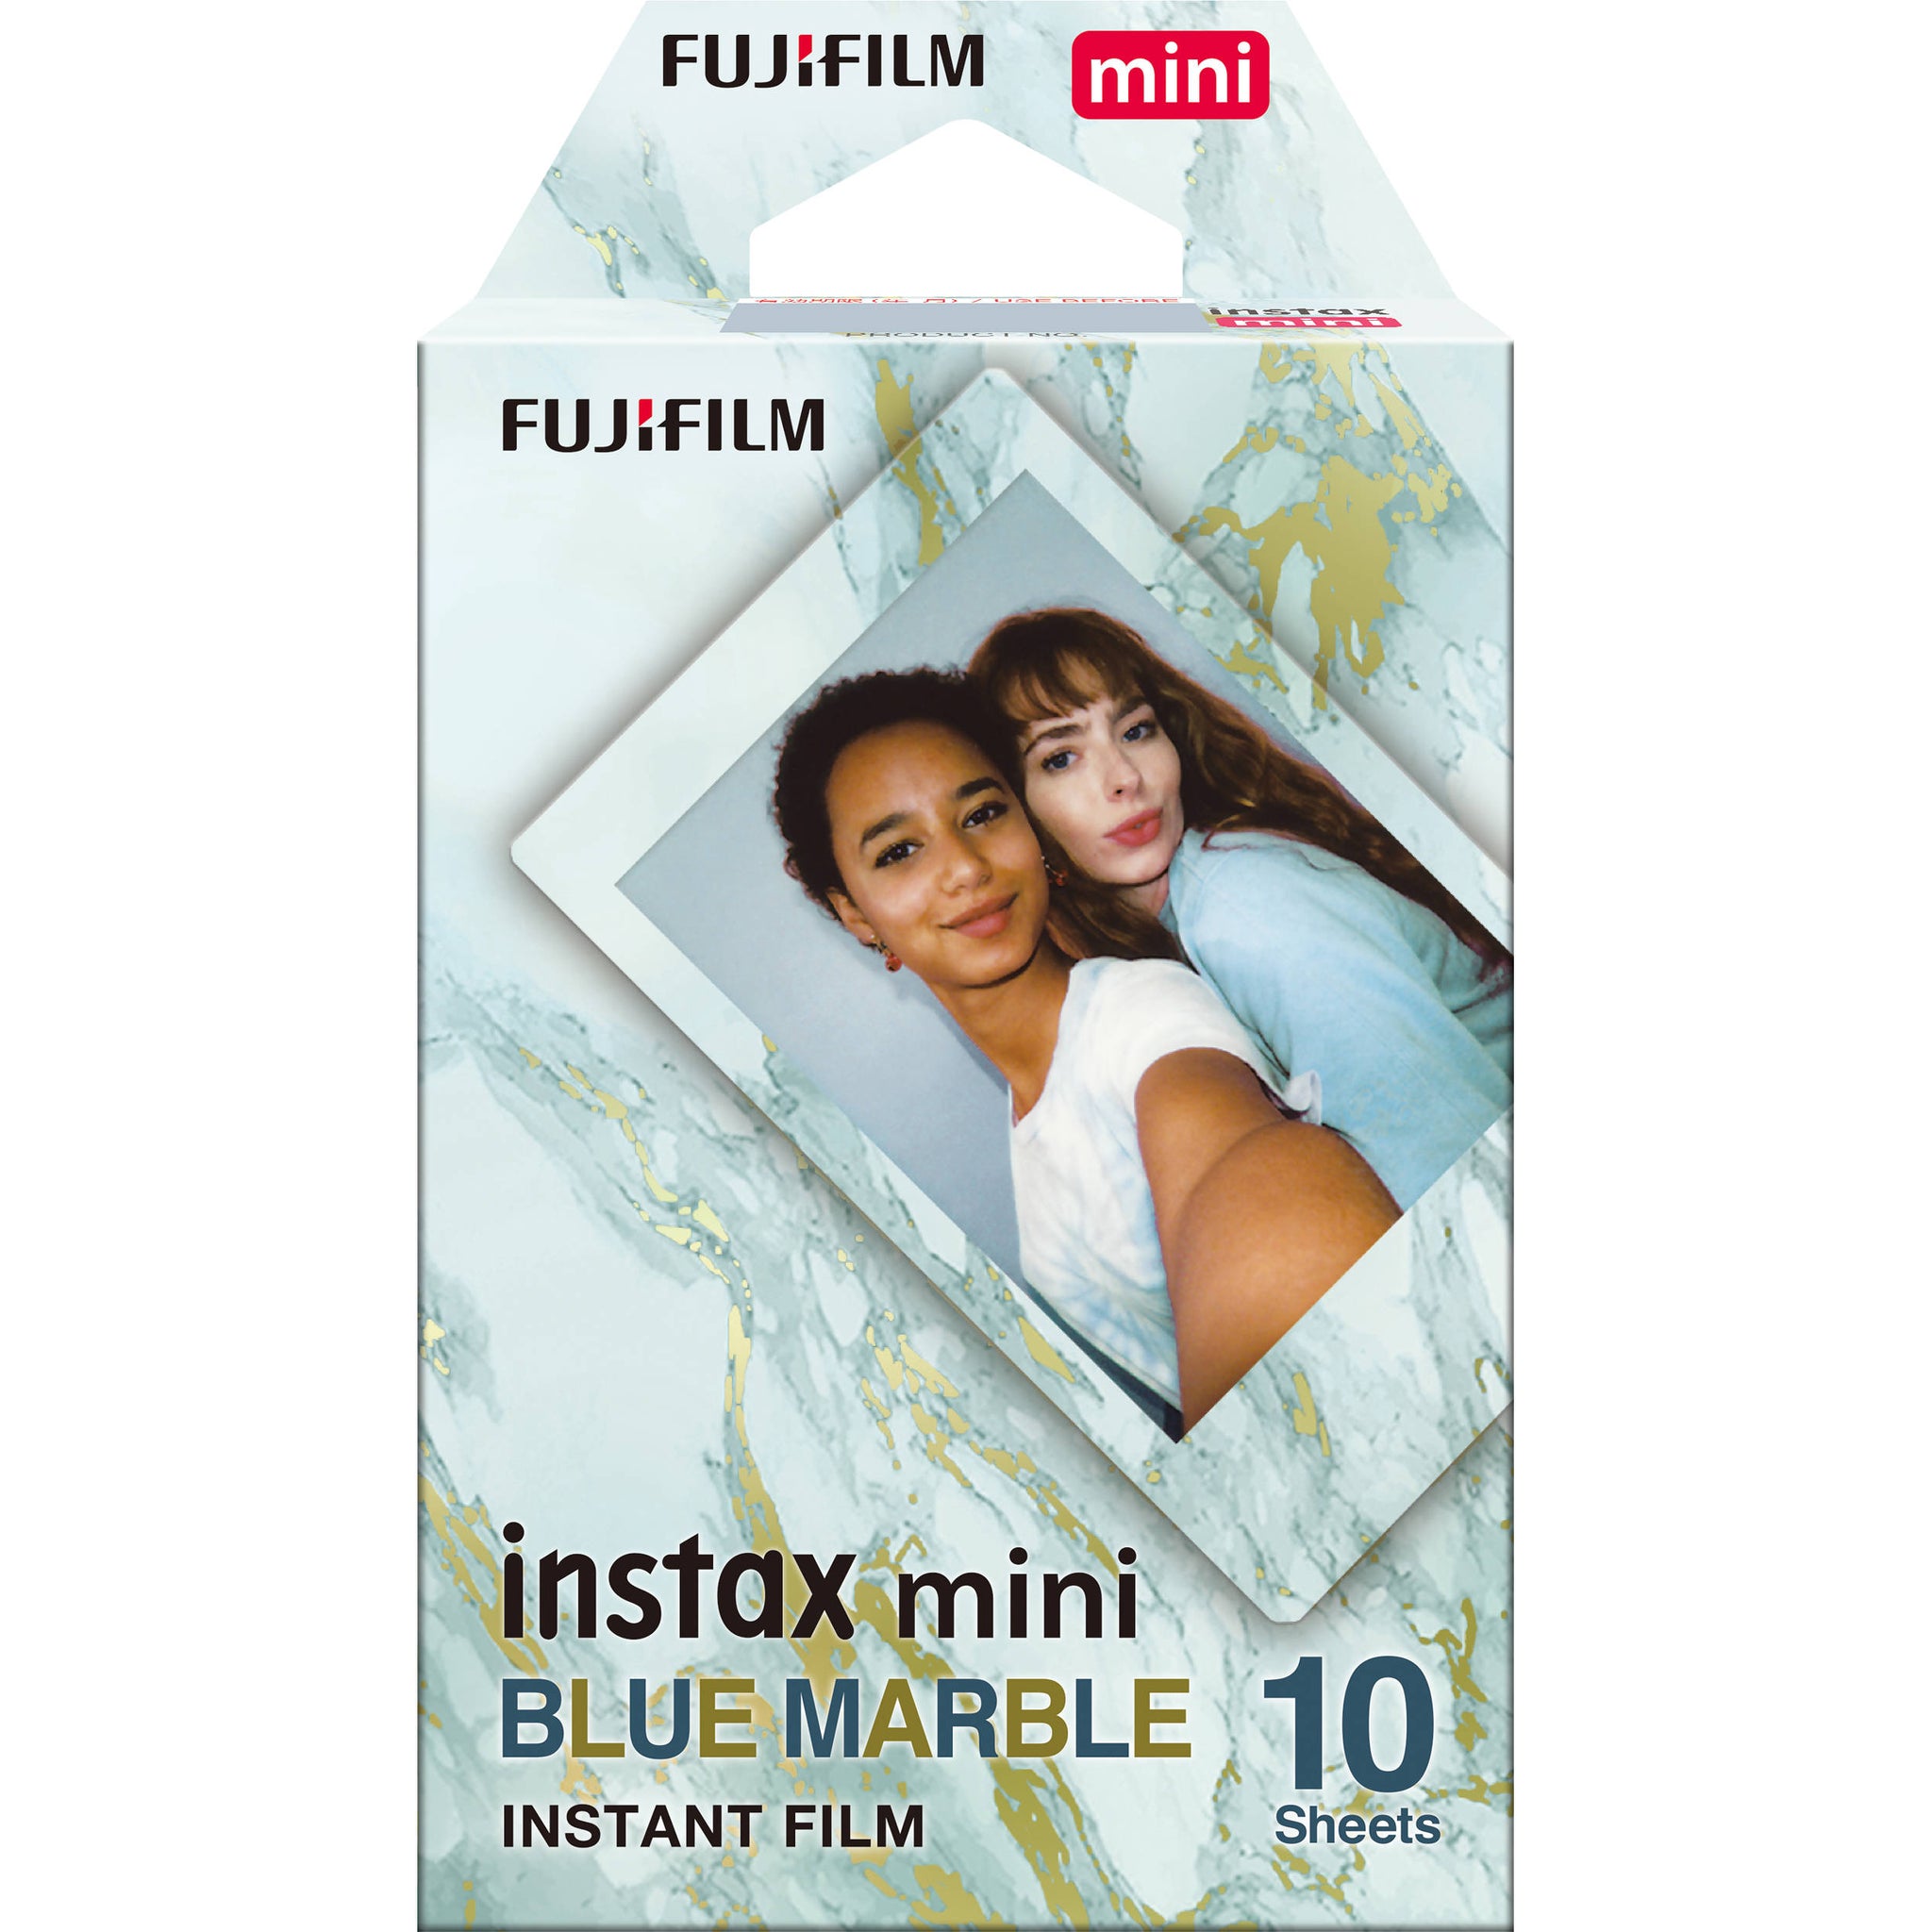 Fujifilm Instax Mini 10X1 blue marble Instant Film with 96-sheet Album for mini film (Charcoal gray)